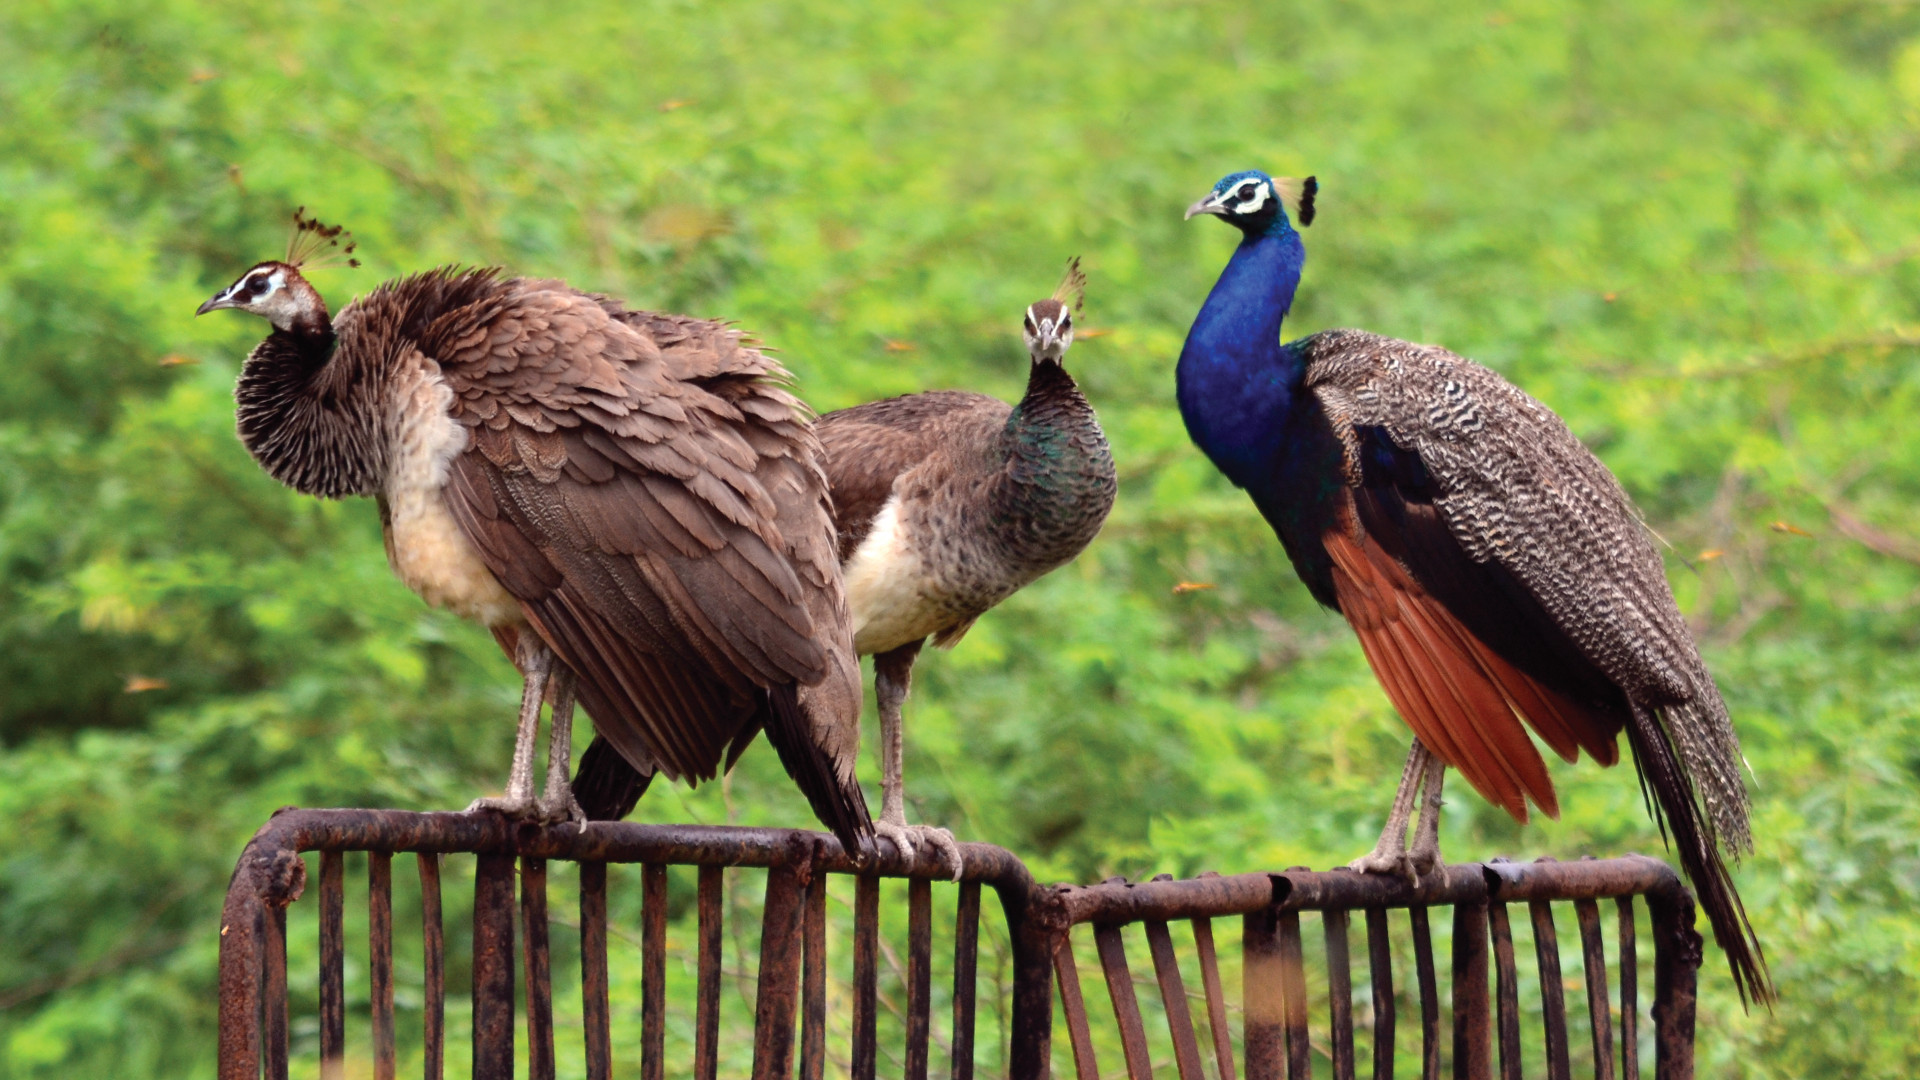 Peafowls at Tata Chemicals' Biodiversity Park in Mithapur, Gujarat